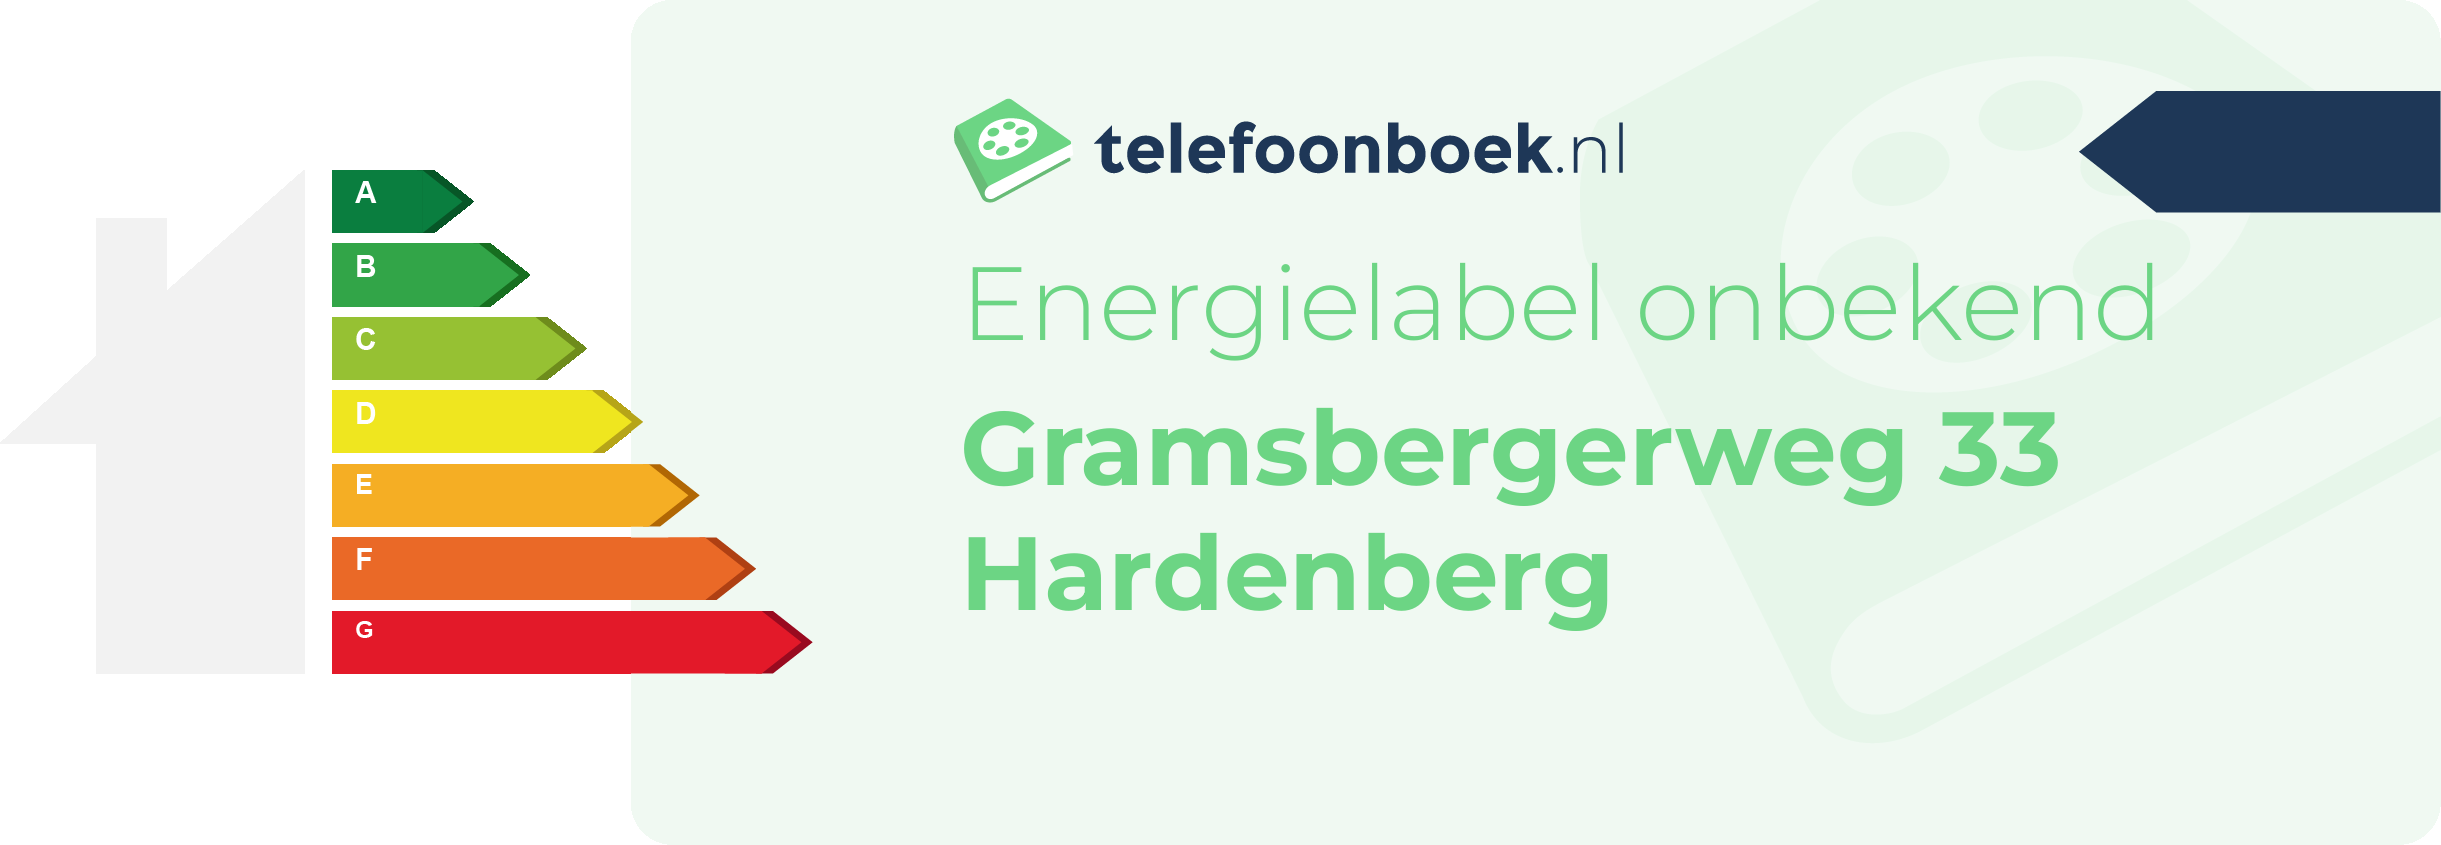 Energielabel Gramsbergerweg 33 Hardenberg